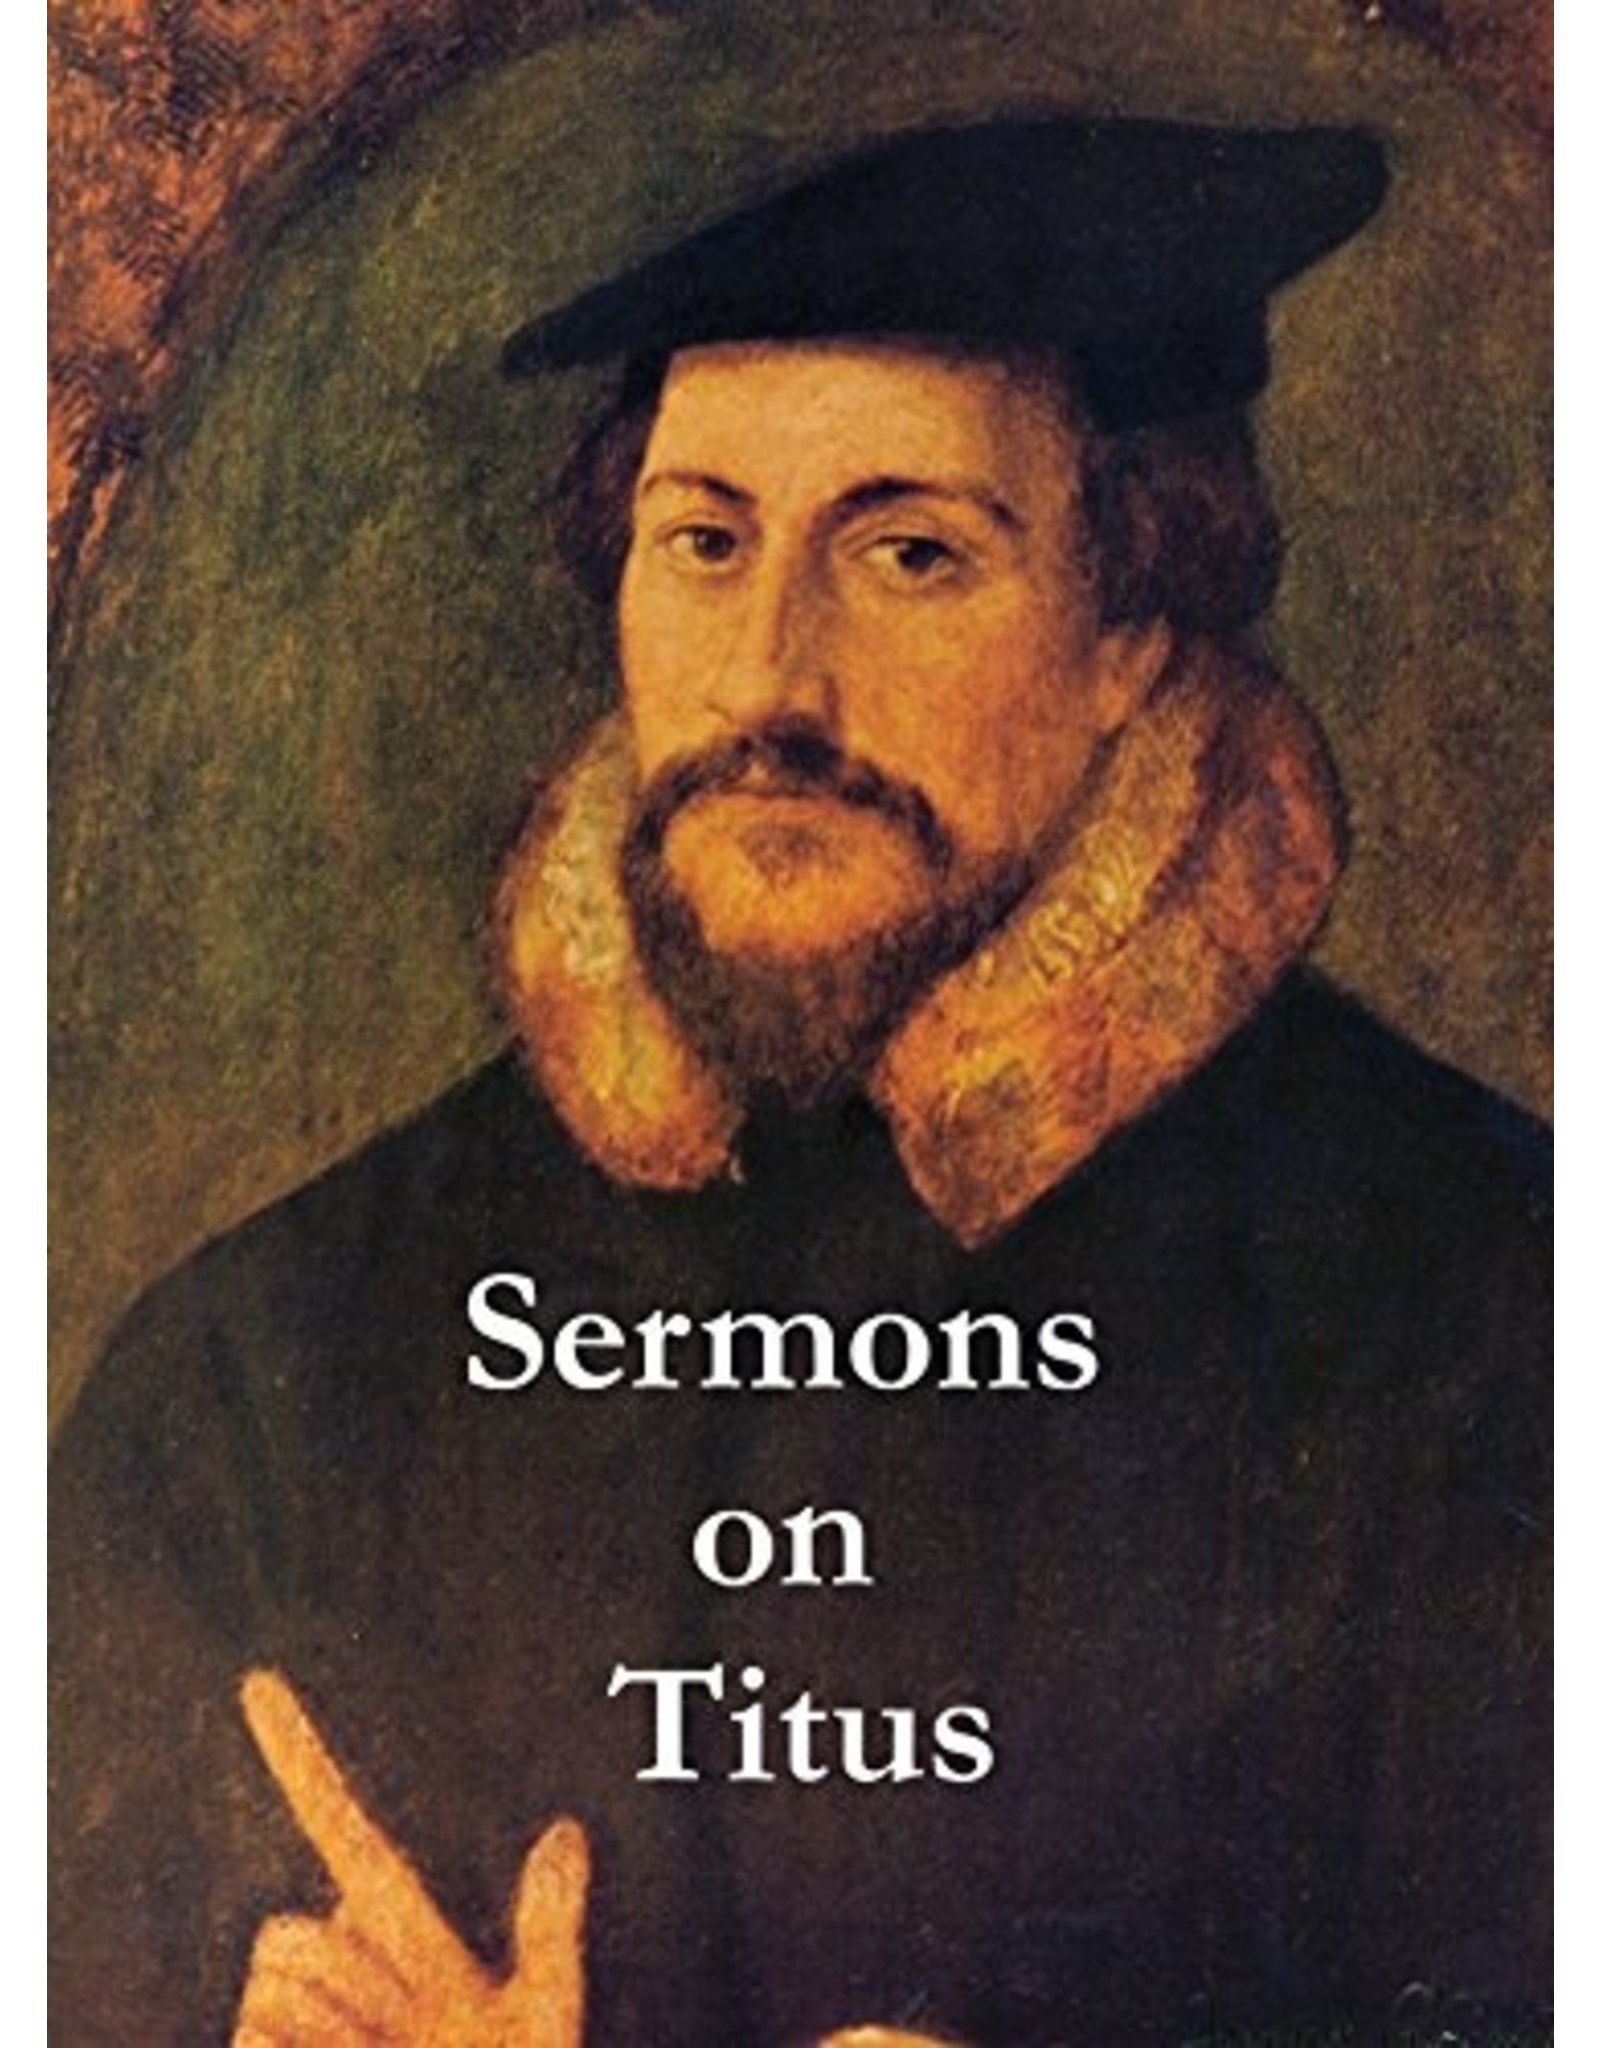 John Calvin Sermons on Titus